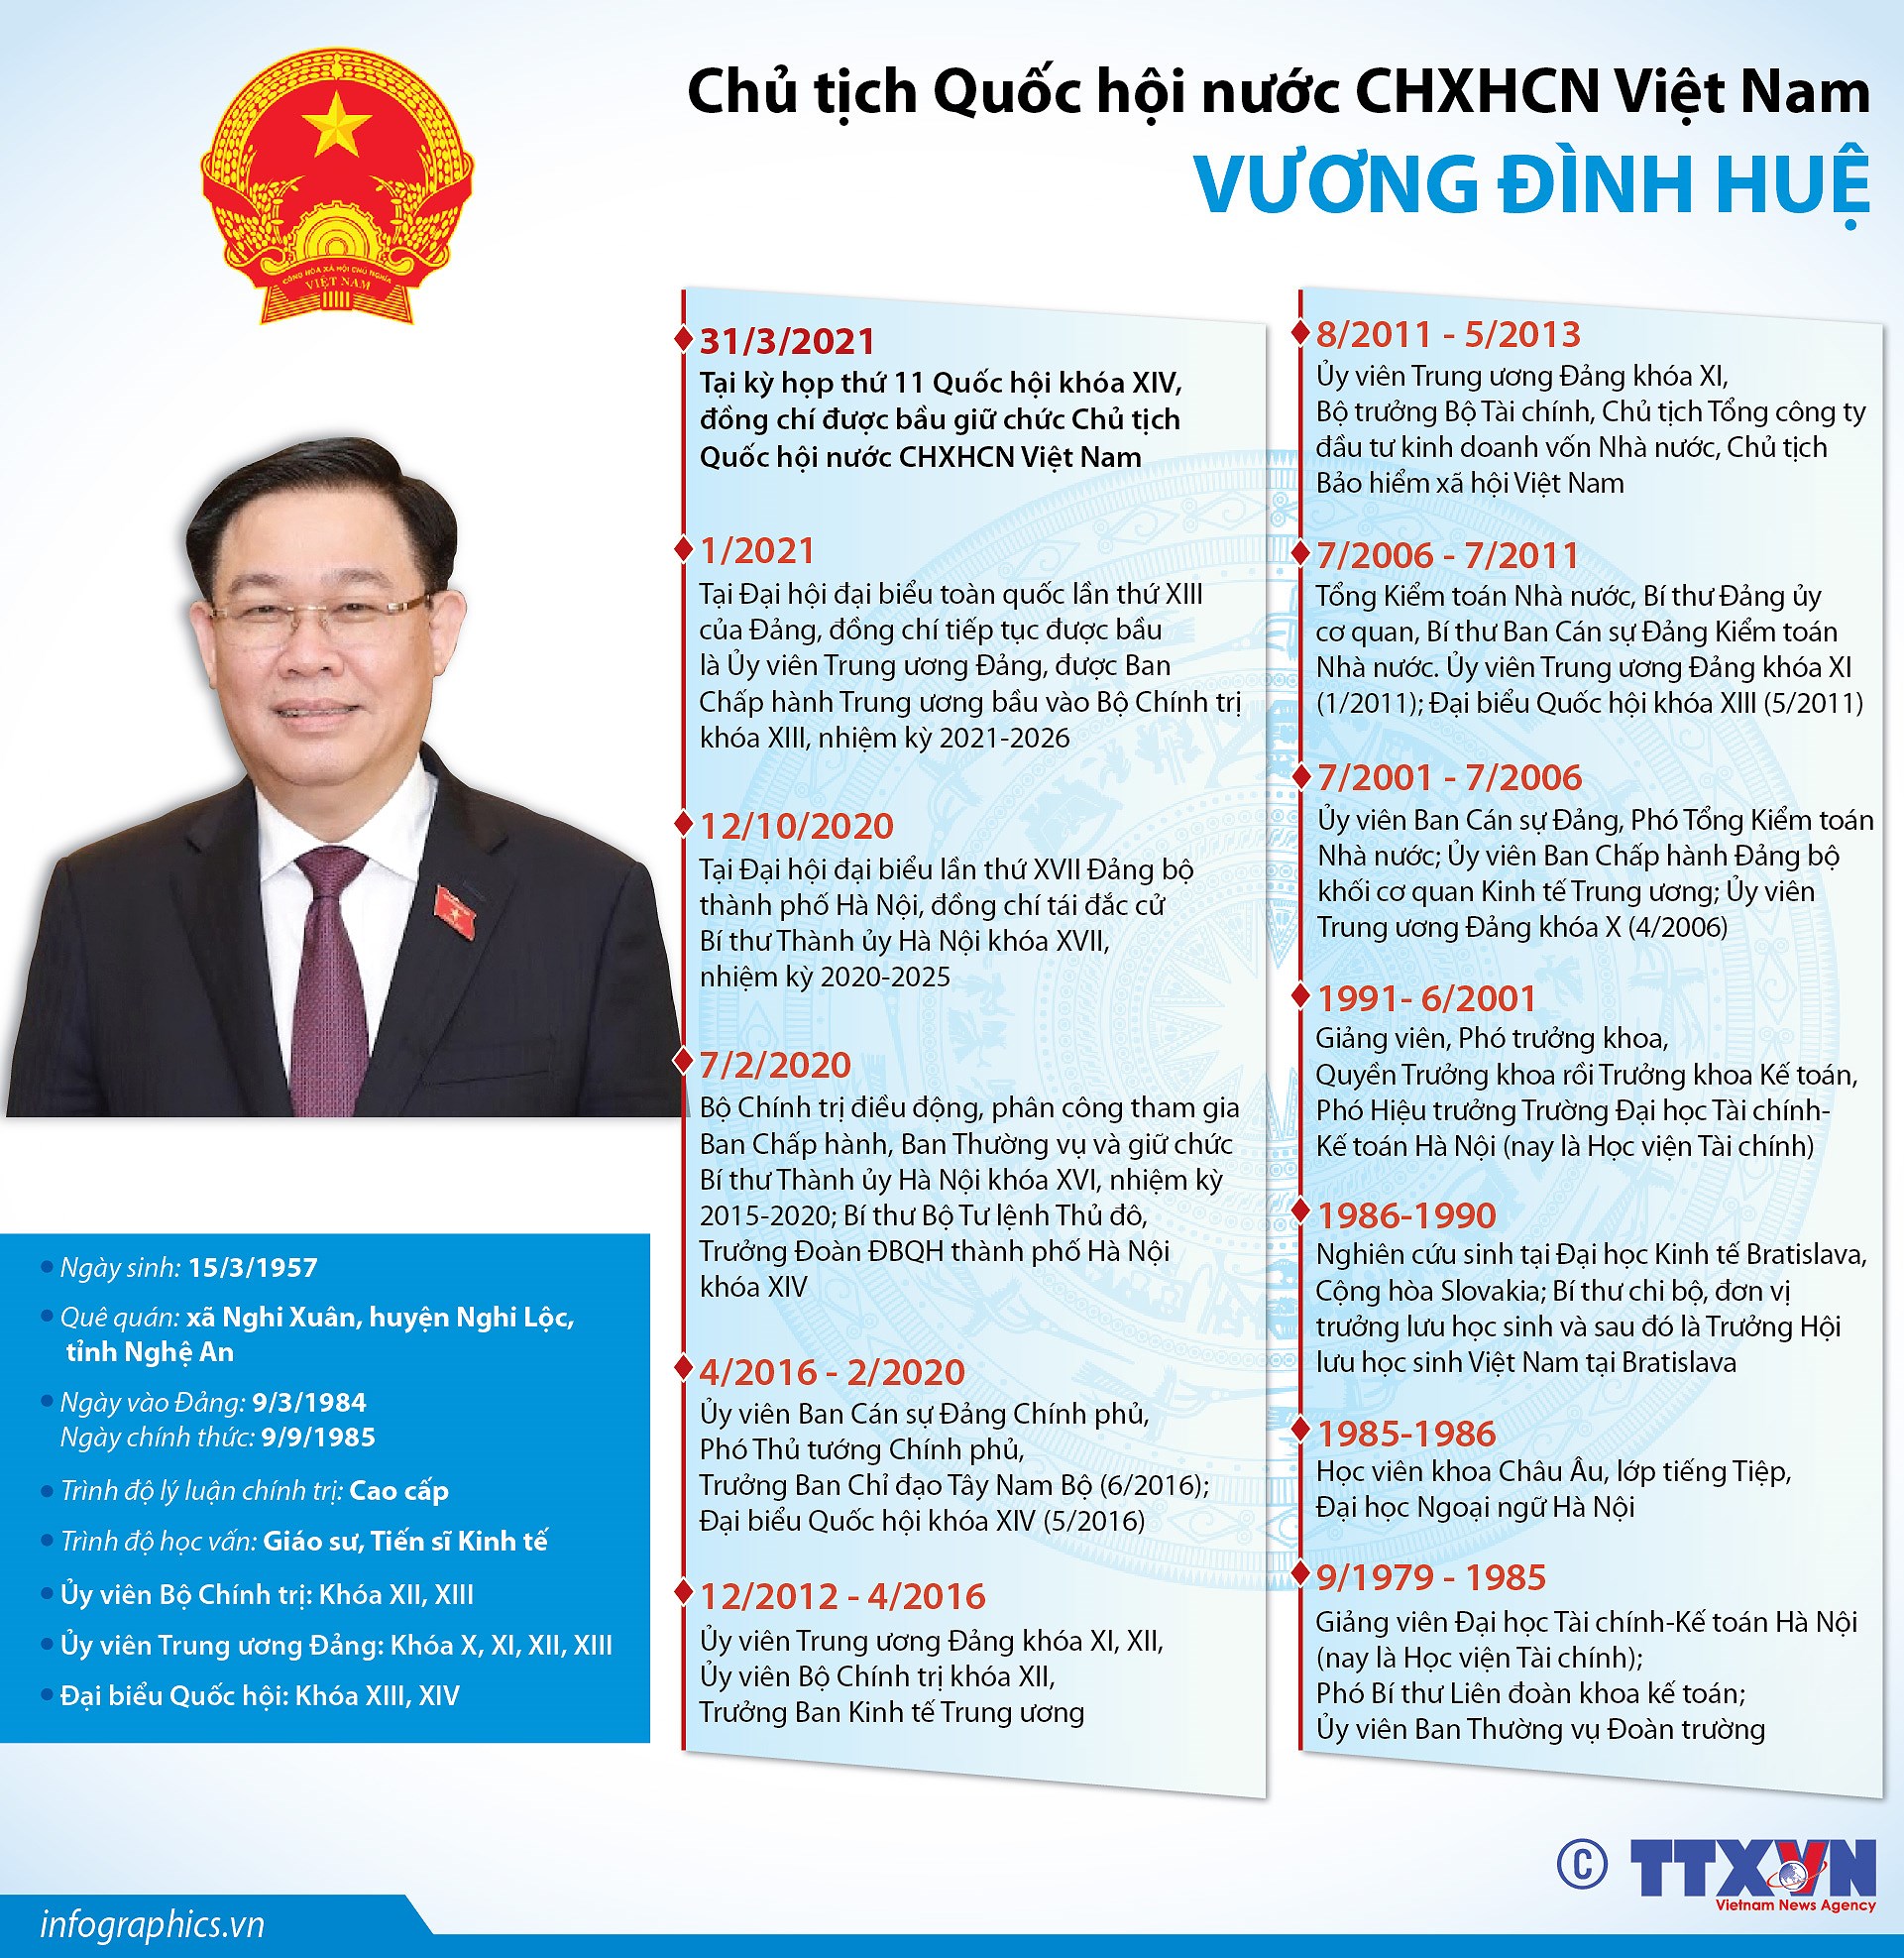 [Infographics] Chu tich Quoc hoi nuoc CHXHCN Viet Nam Vuong Dinh Hue hinh anh 1